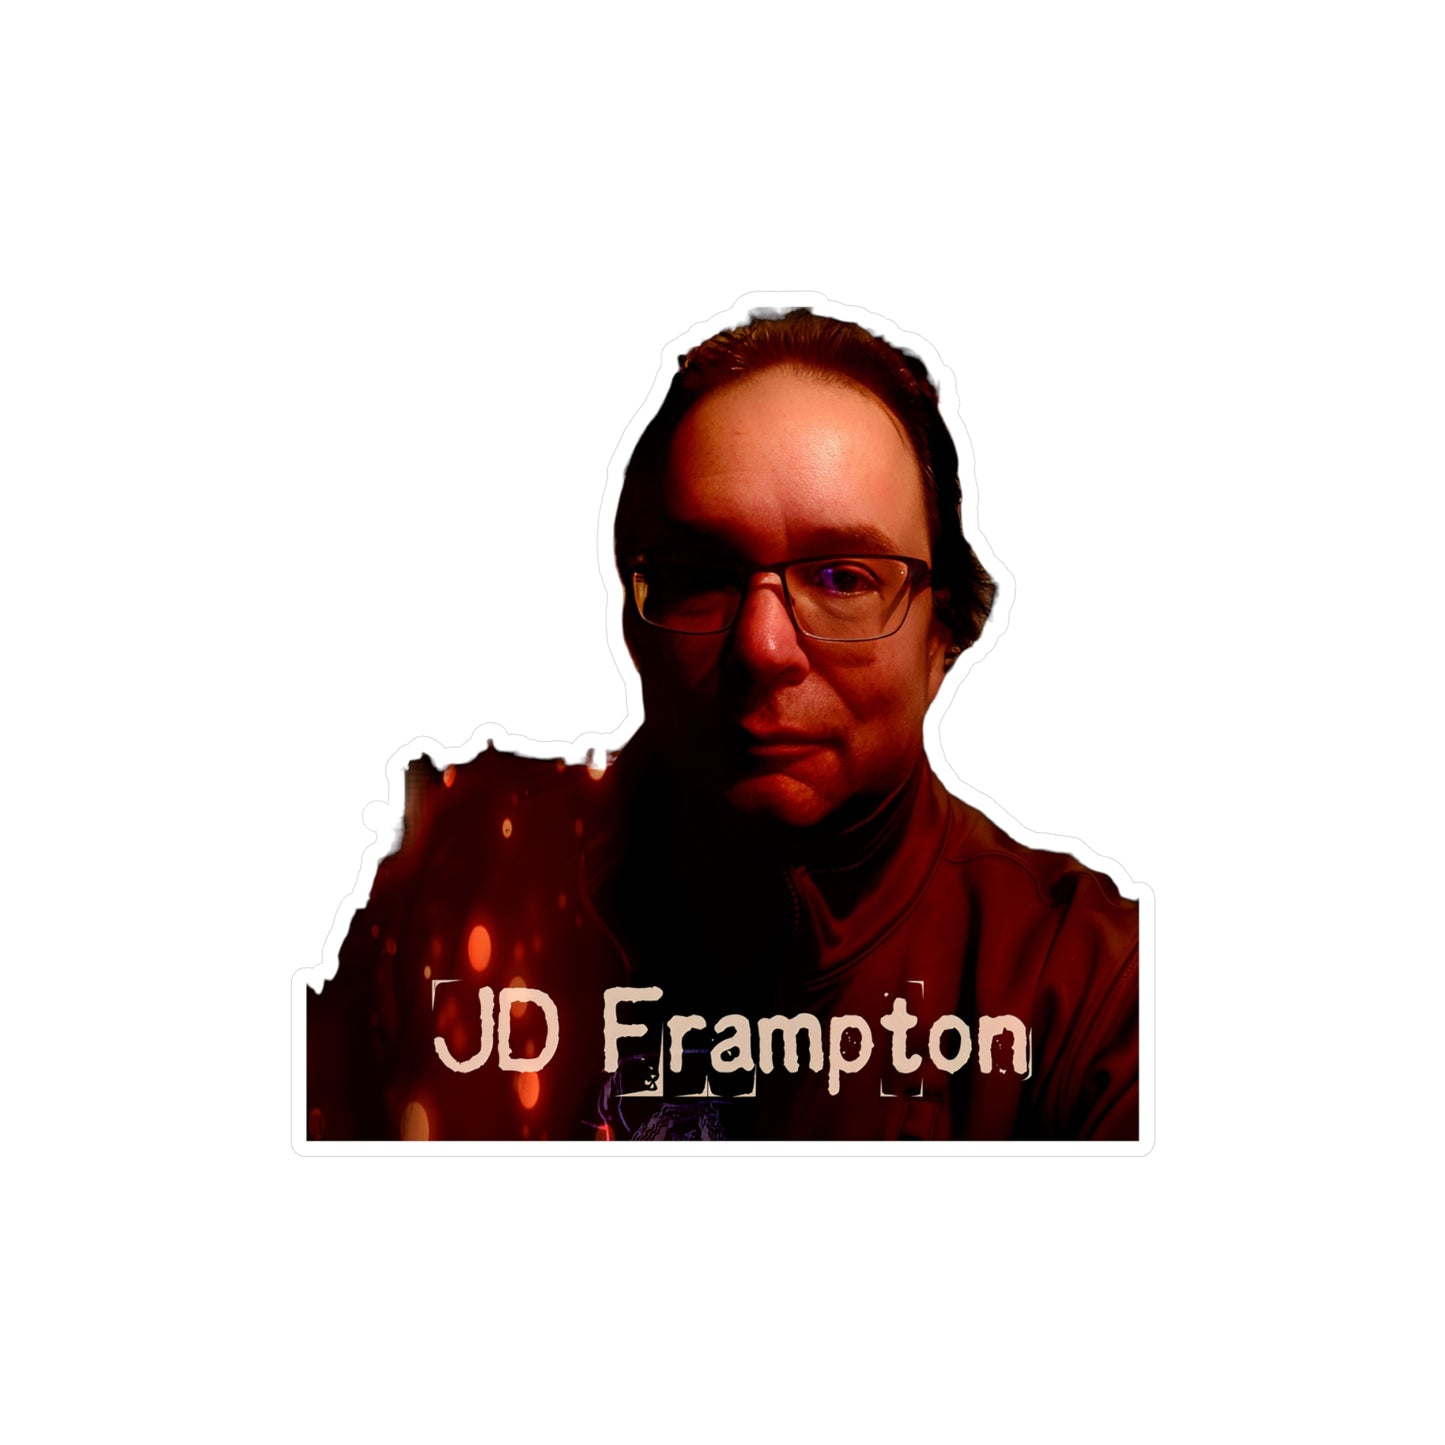 JD FRAMPTON Kiss-Cut Vinyl Decal